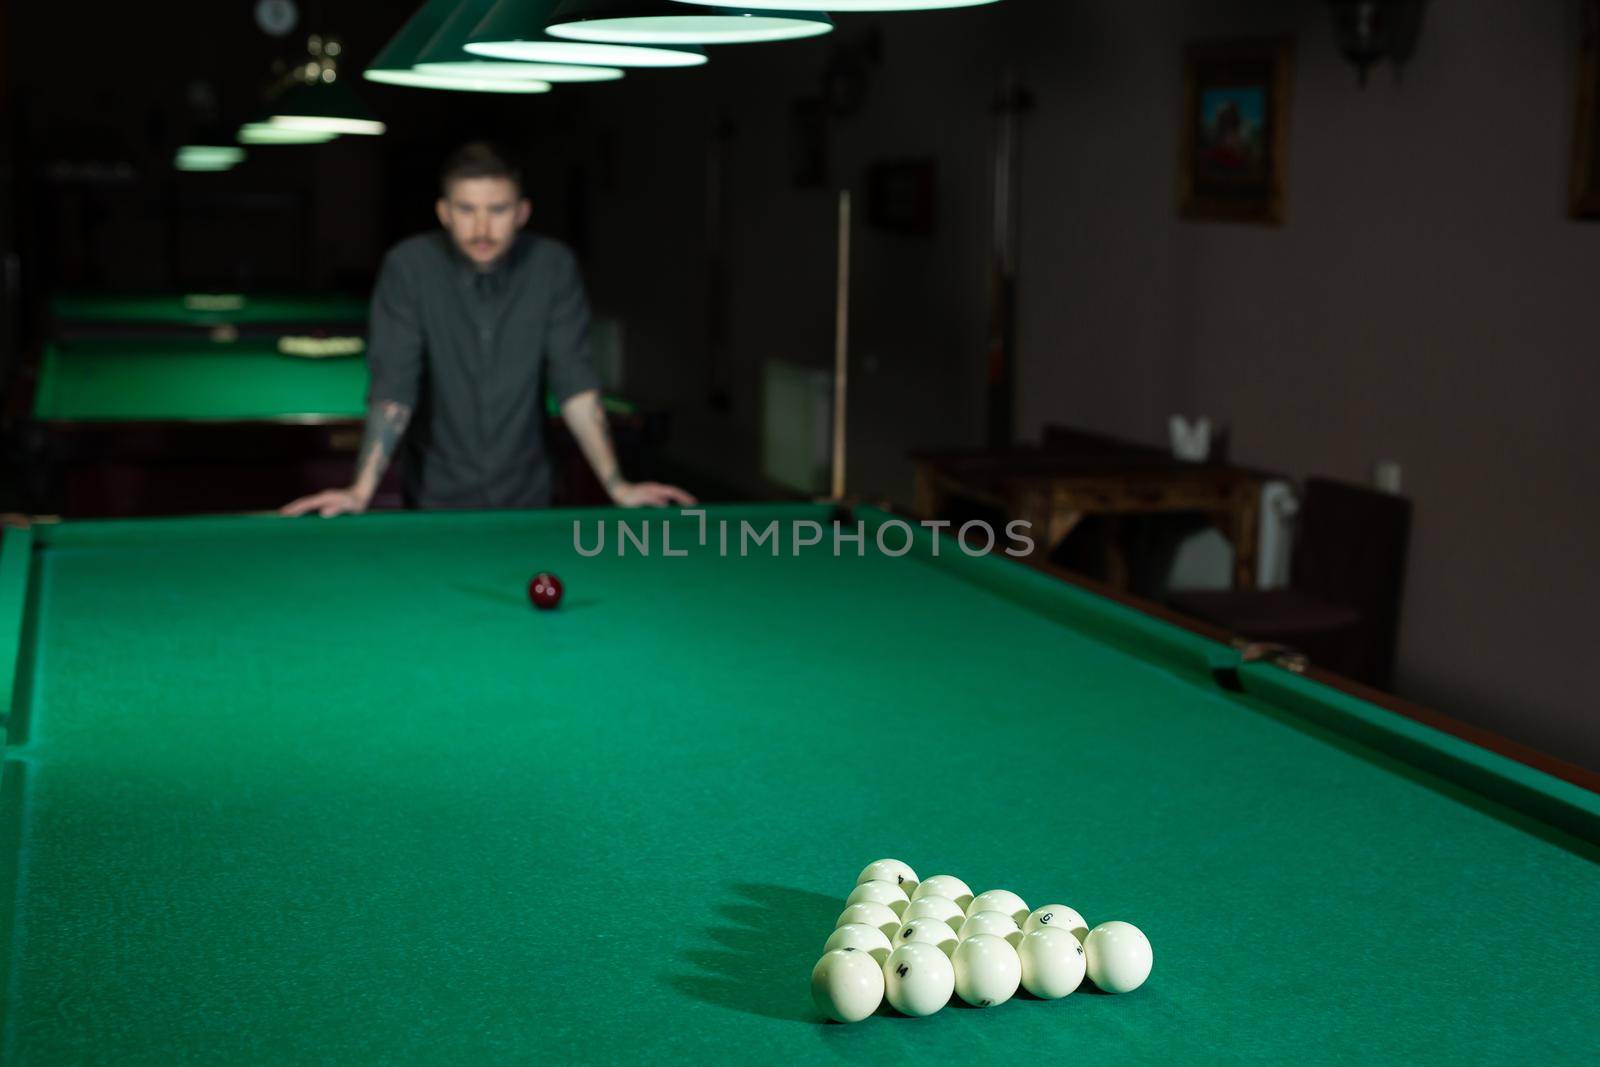 Billiard balls in a green billiard table. A man playing Billiards